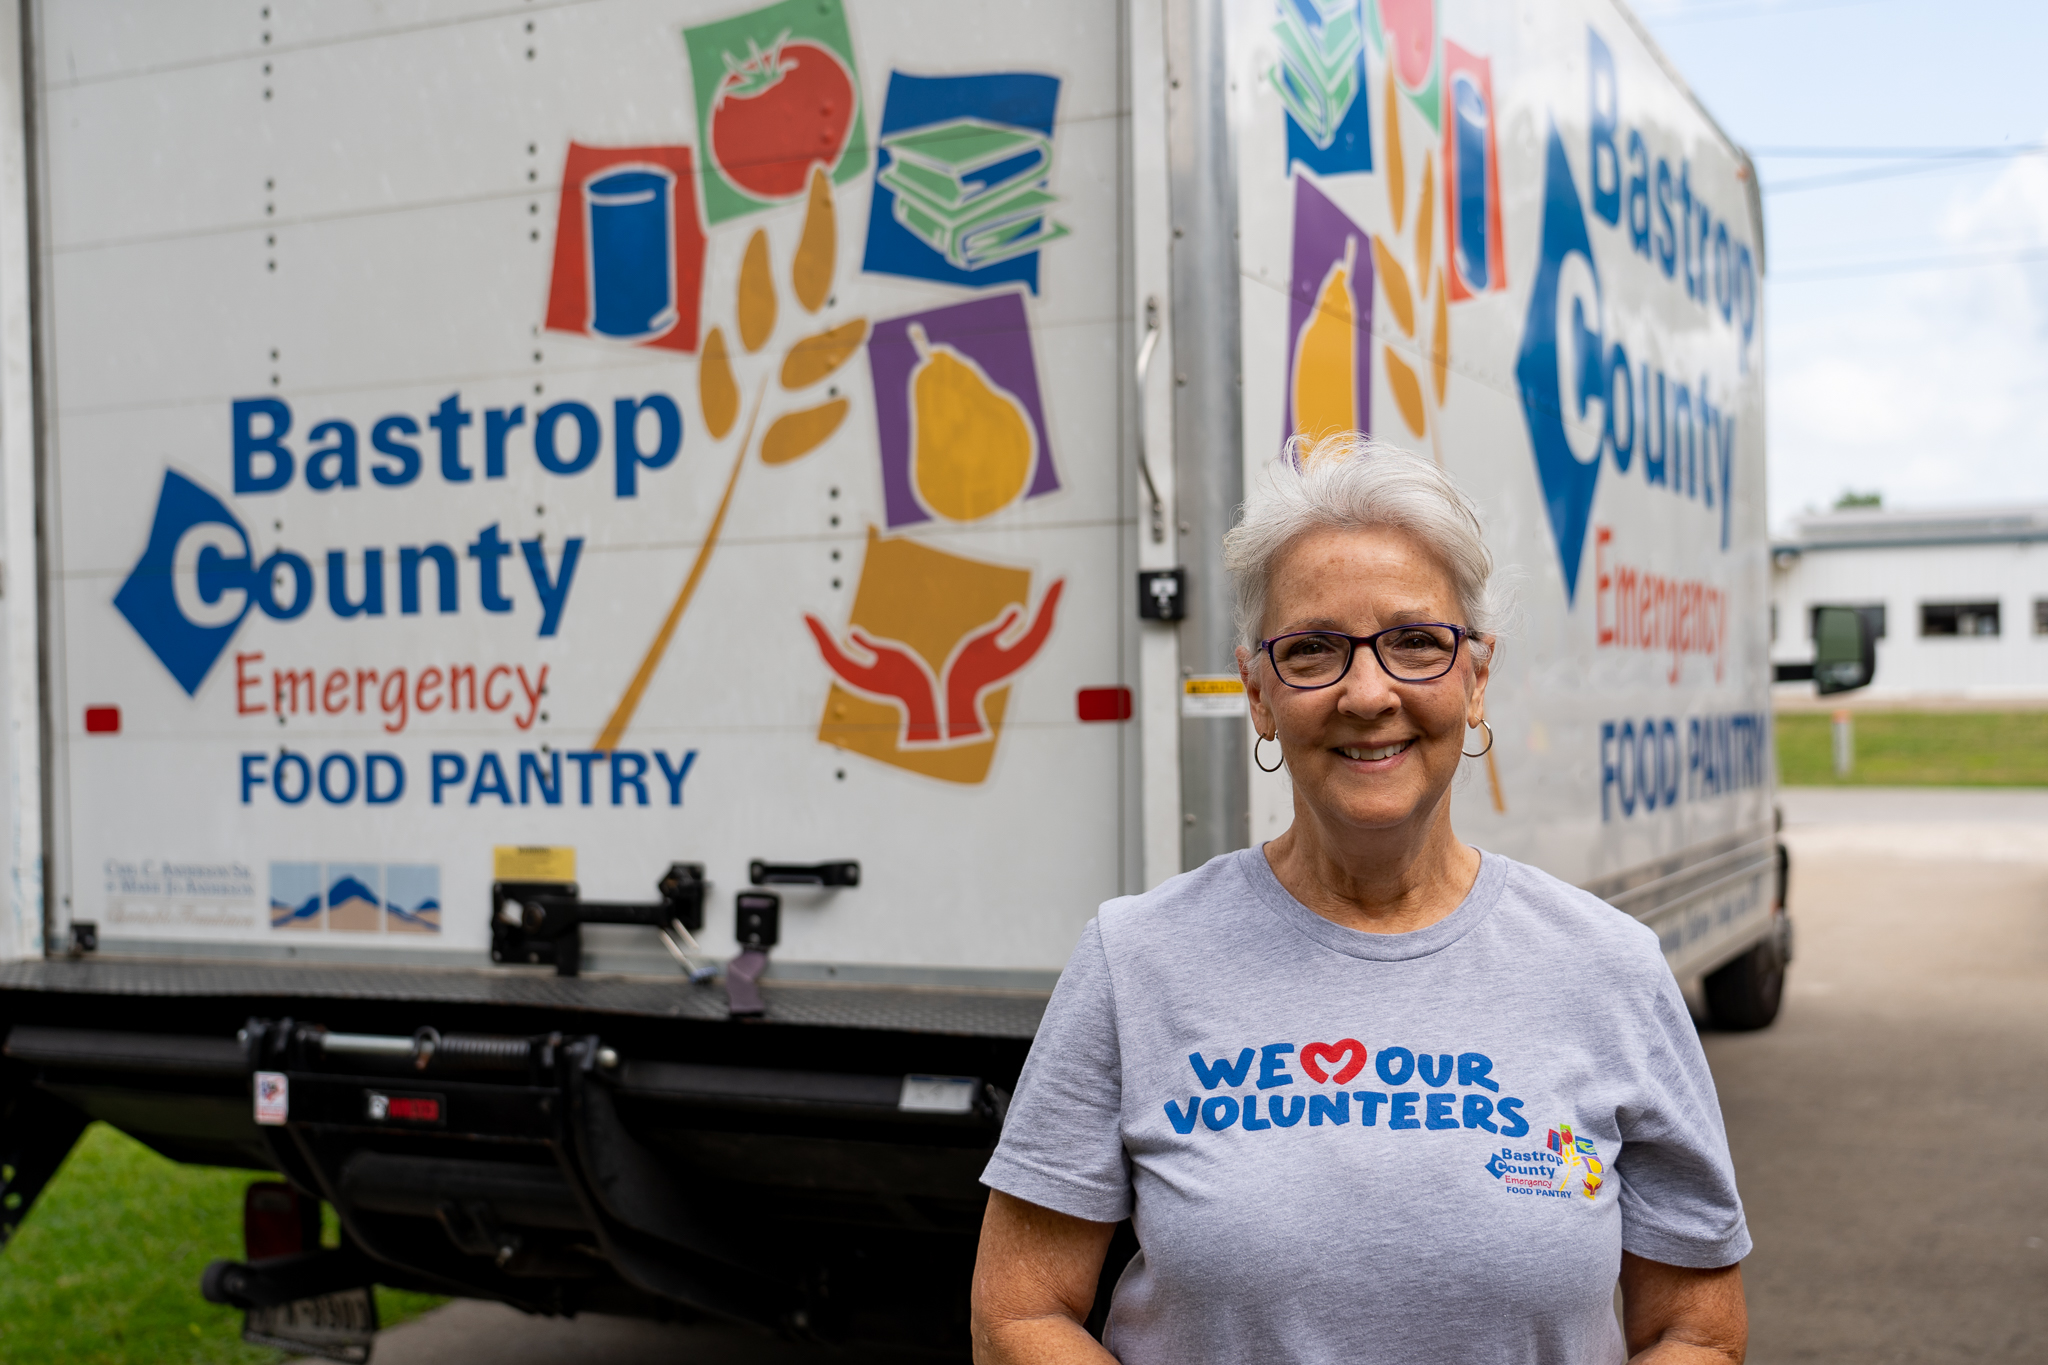 Bastrop County Emergency Food Pantry - Volunteer Manager